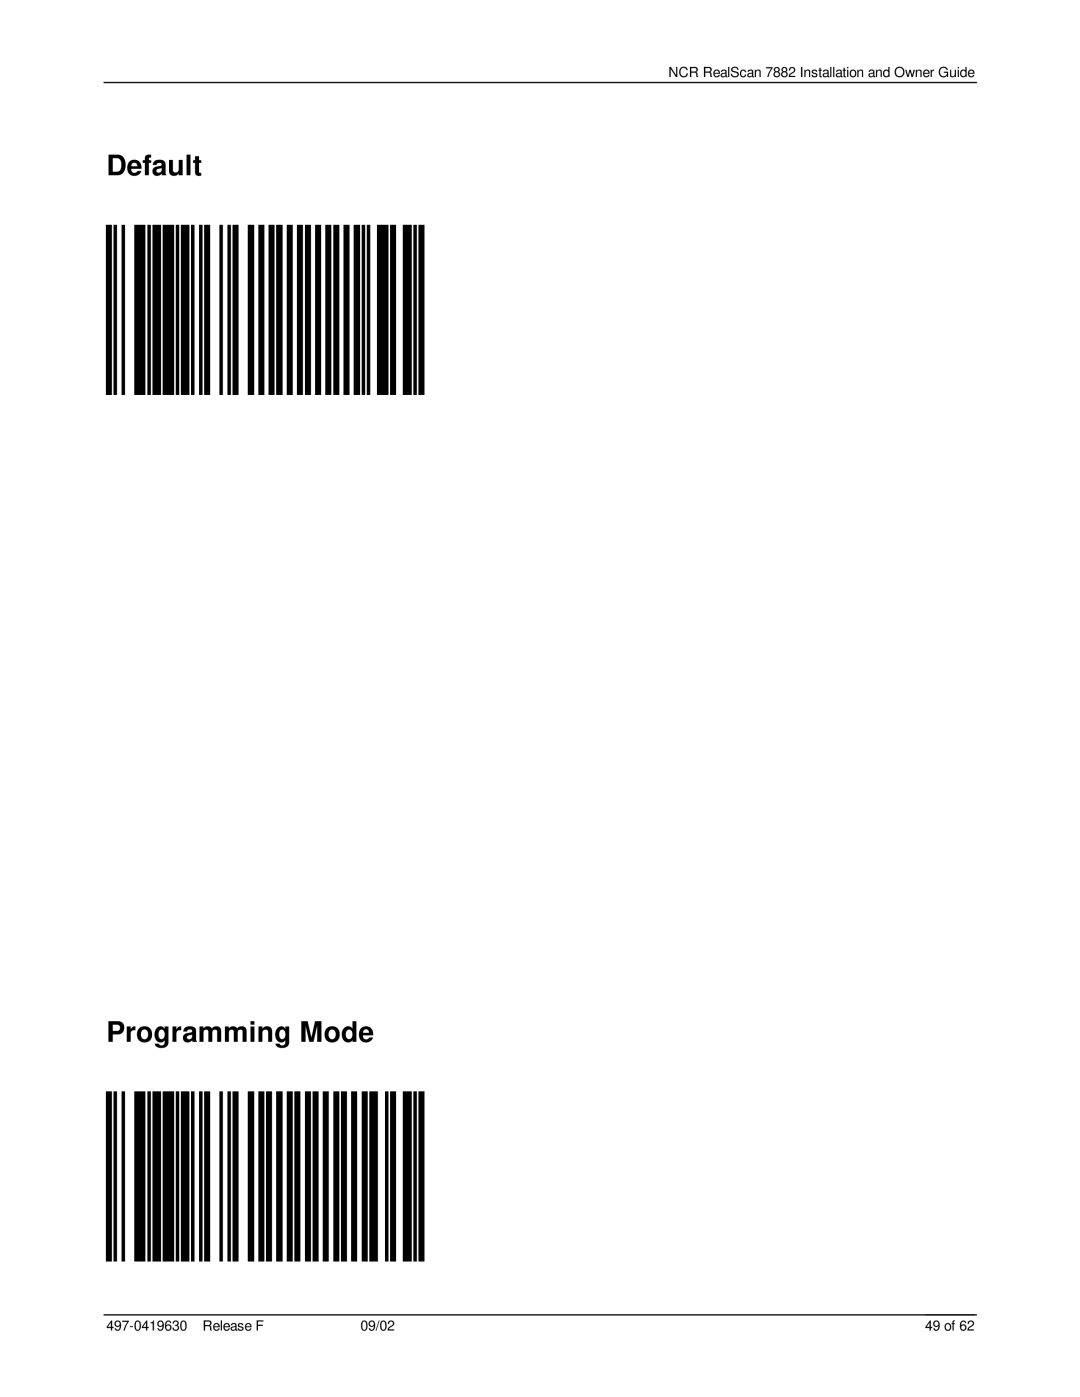 NCR 7882 manual Default Programming Mode, 49 of 